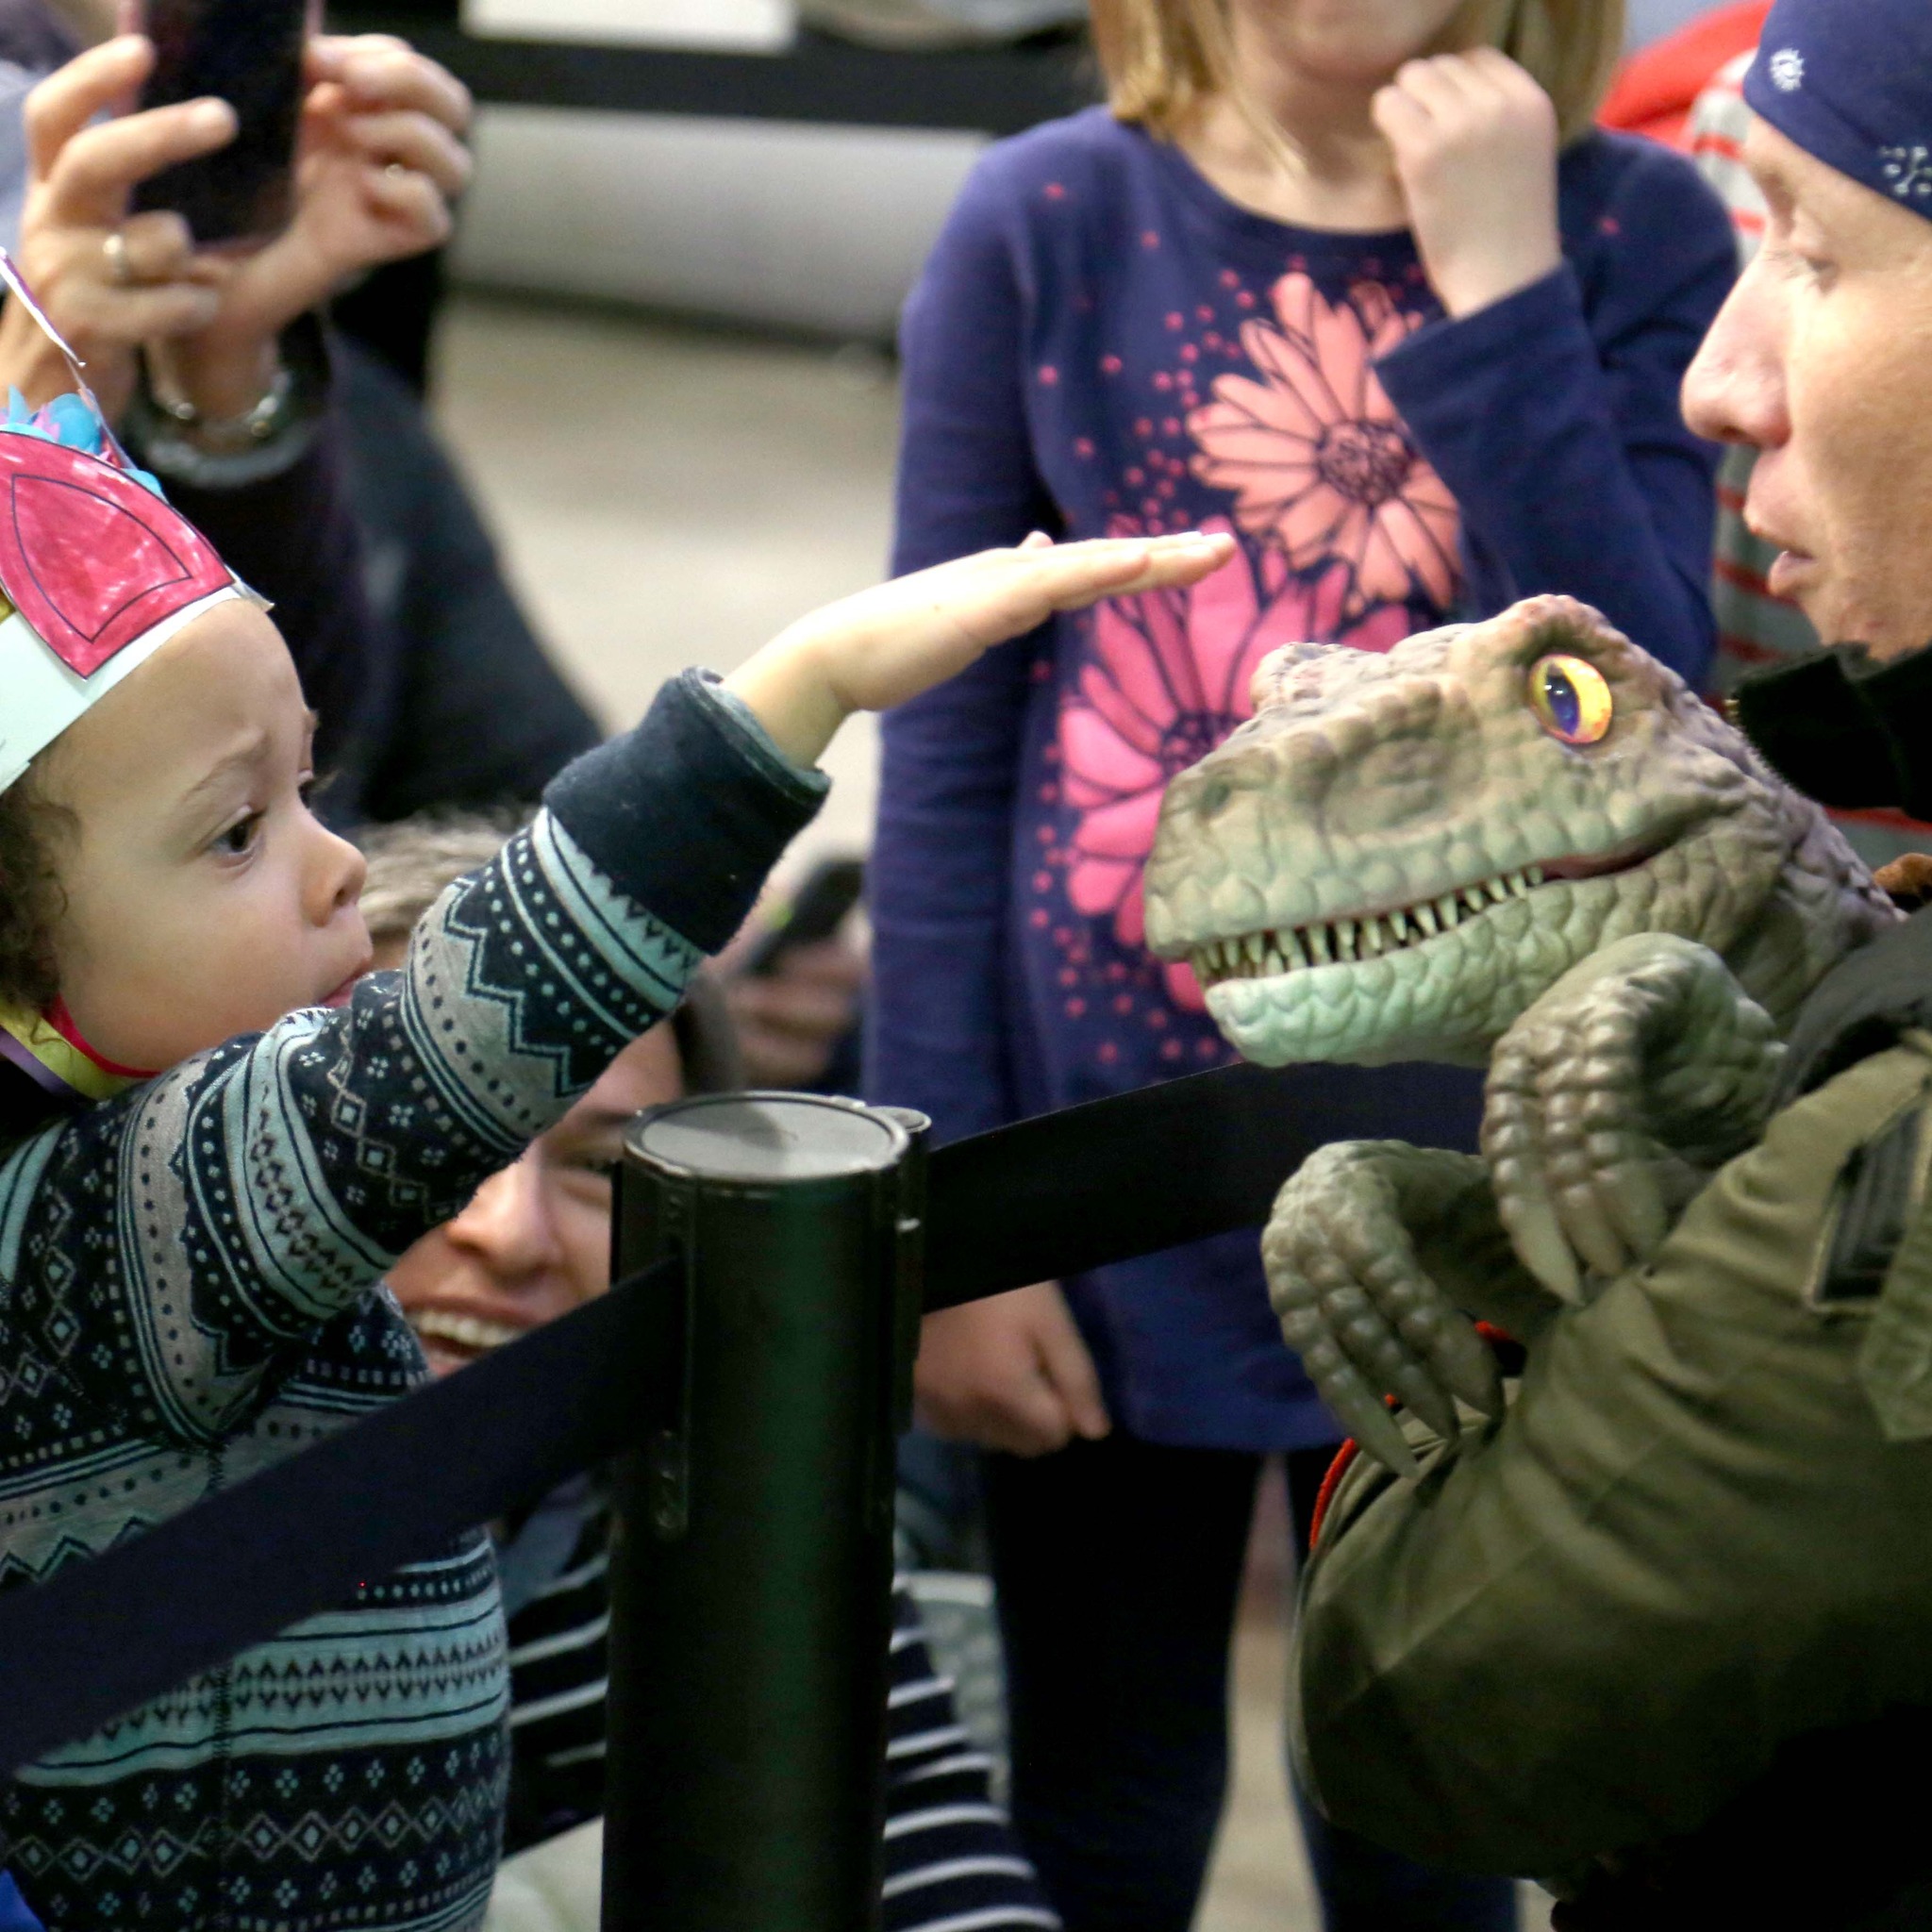 child petting dinosaur hand puppet